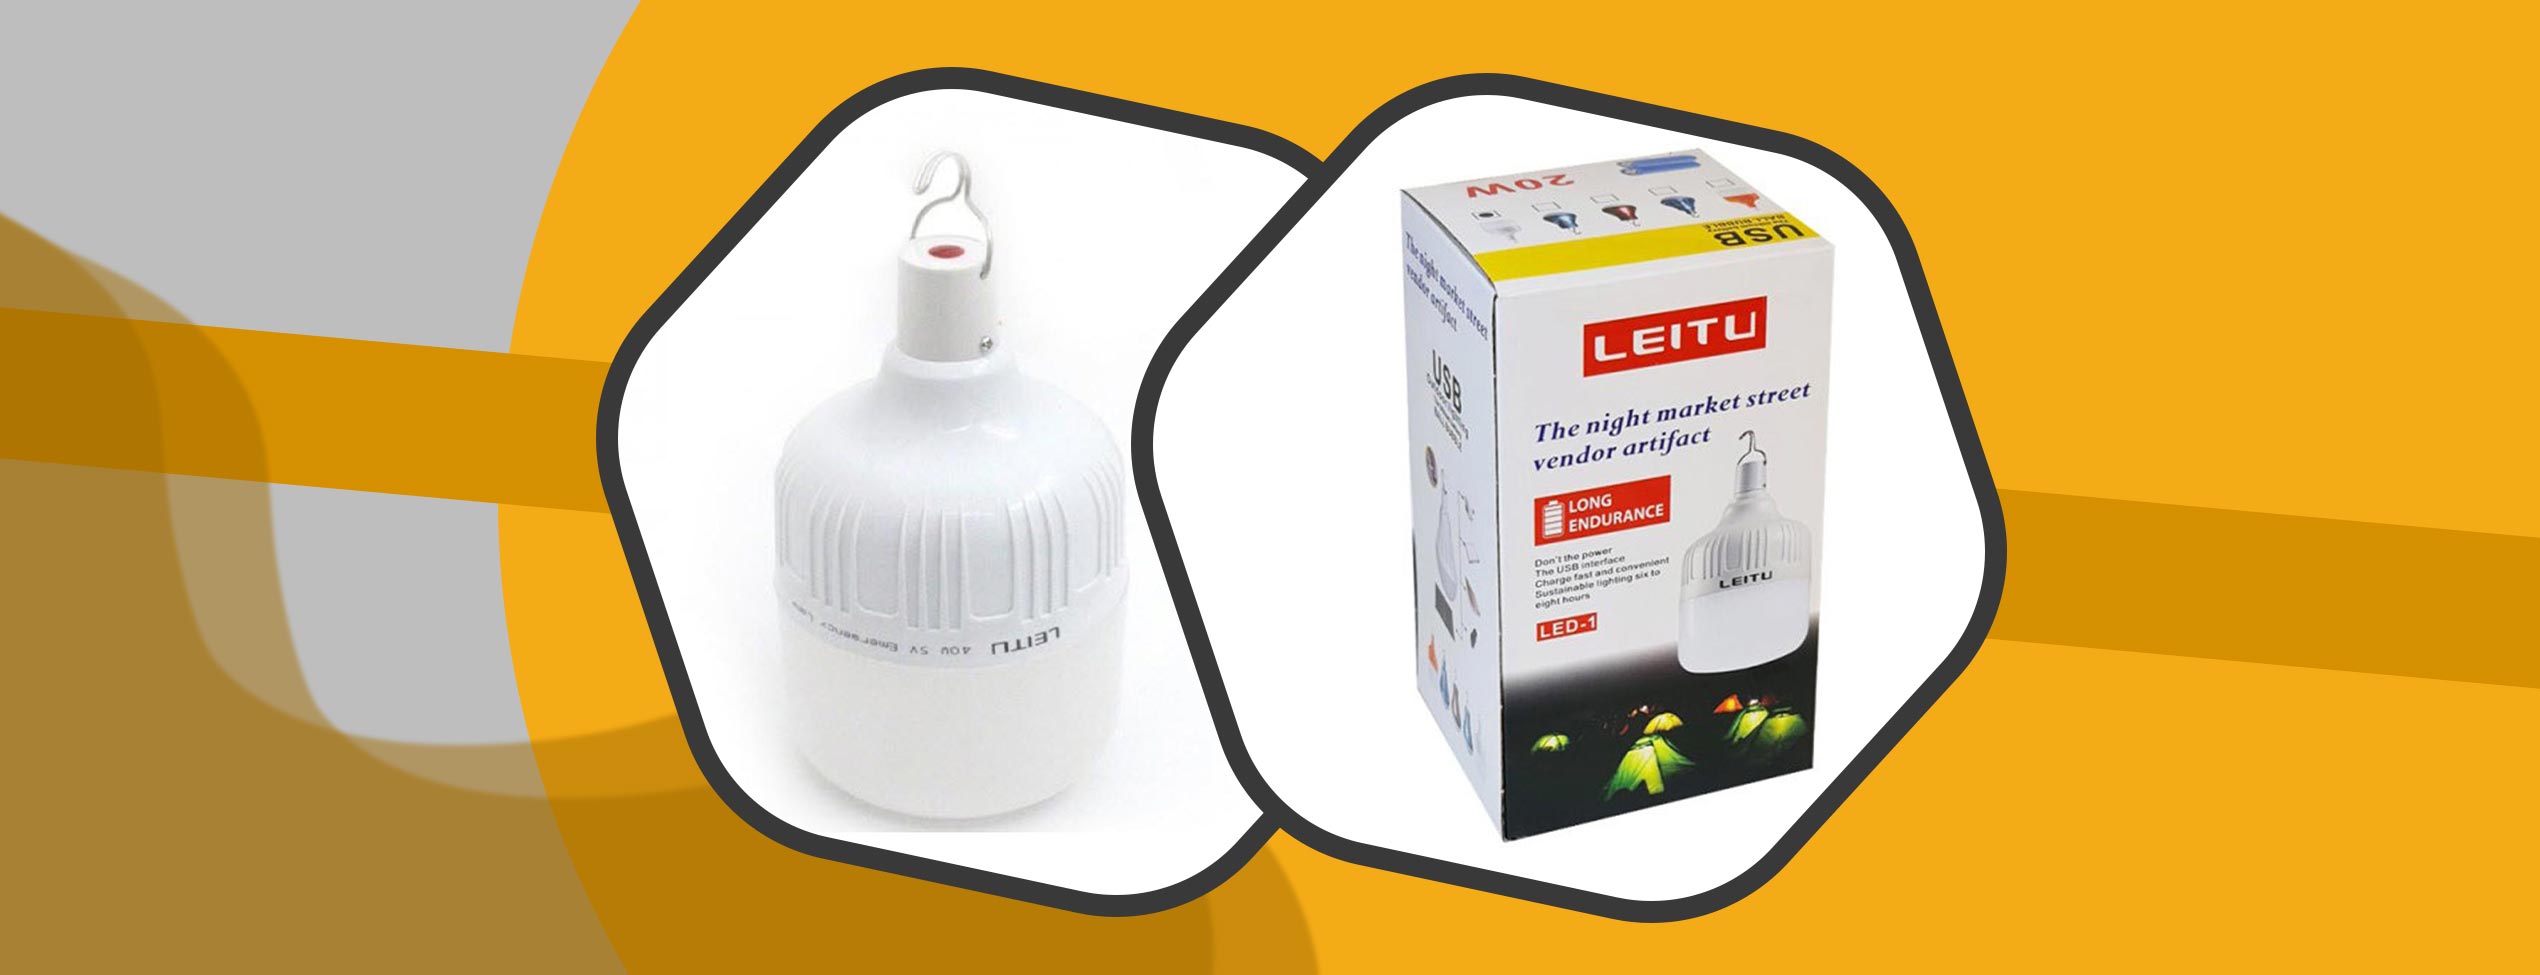 چراغ اضطراری شارژی لیتو Leitu LED-1